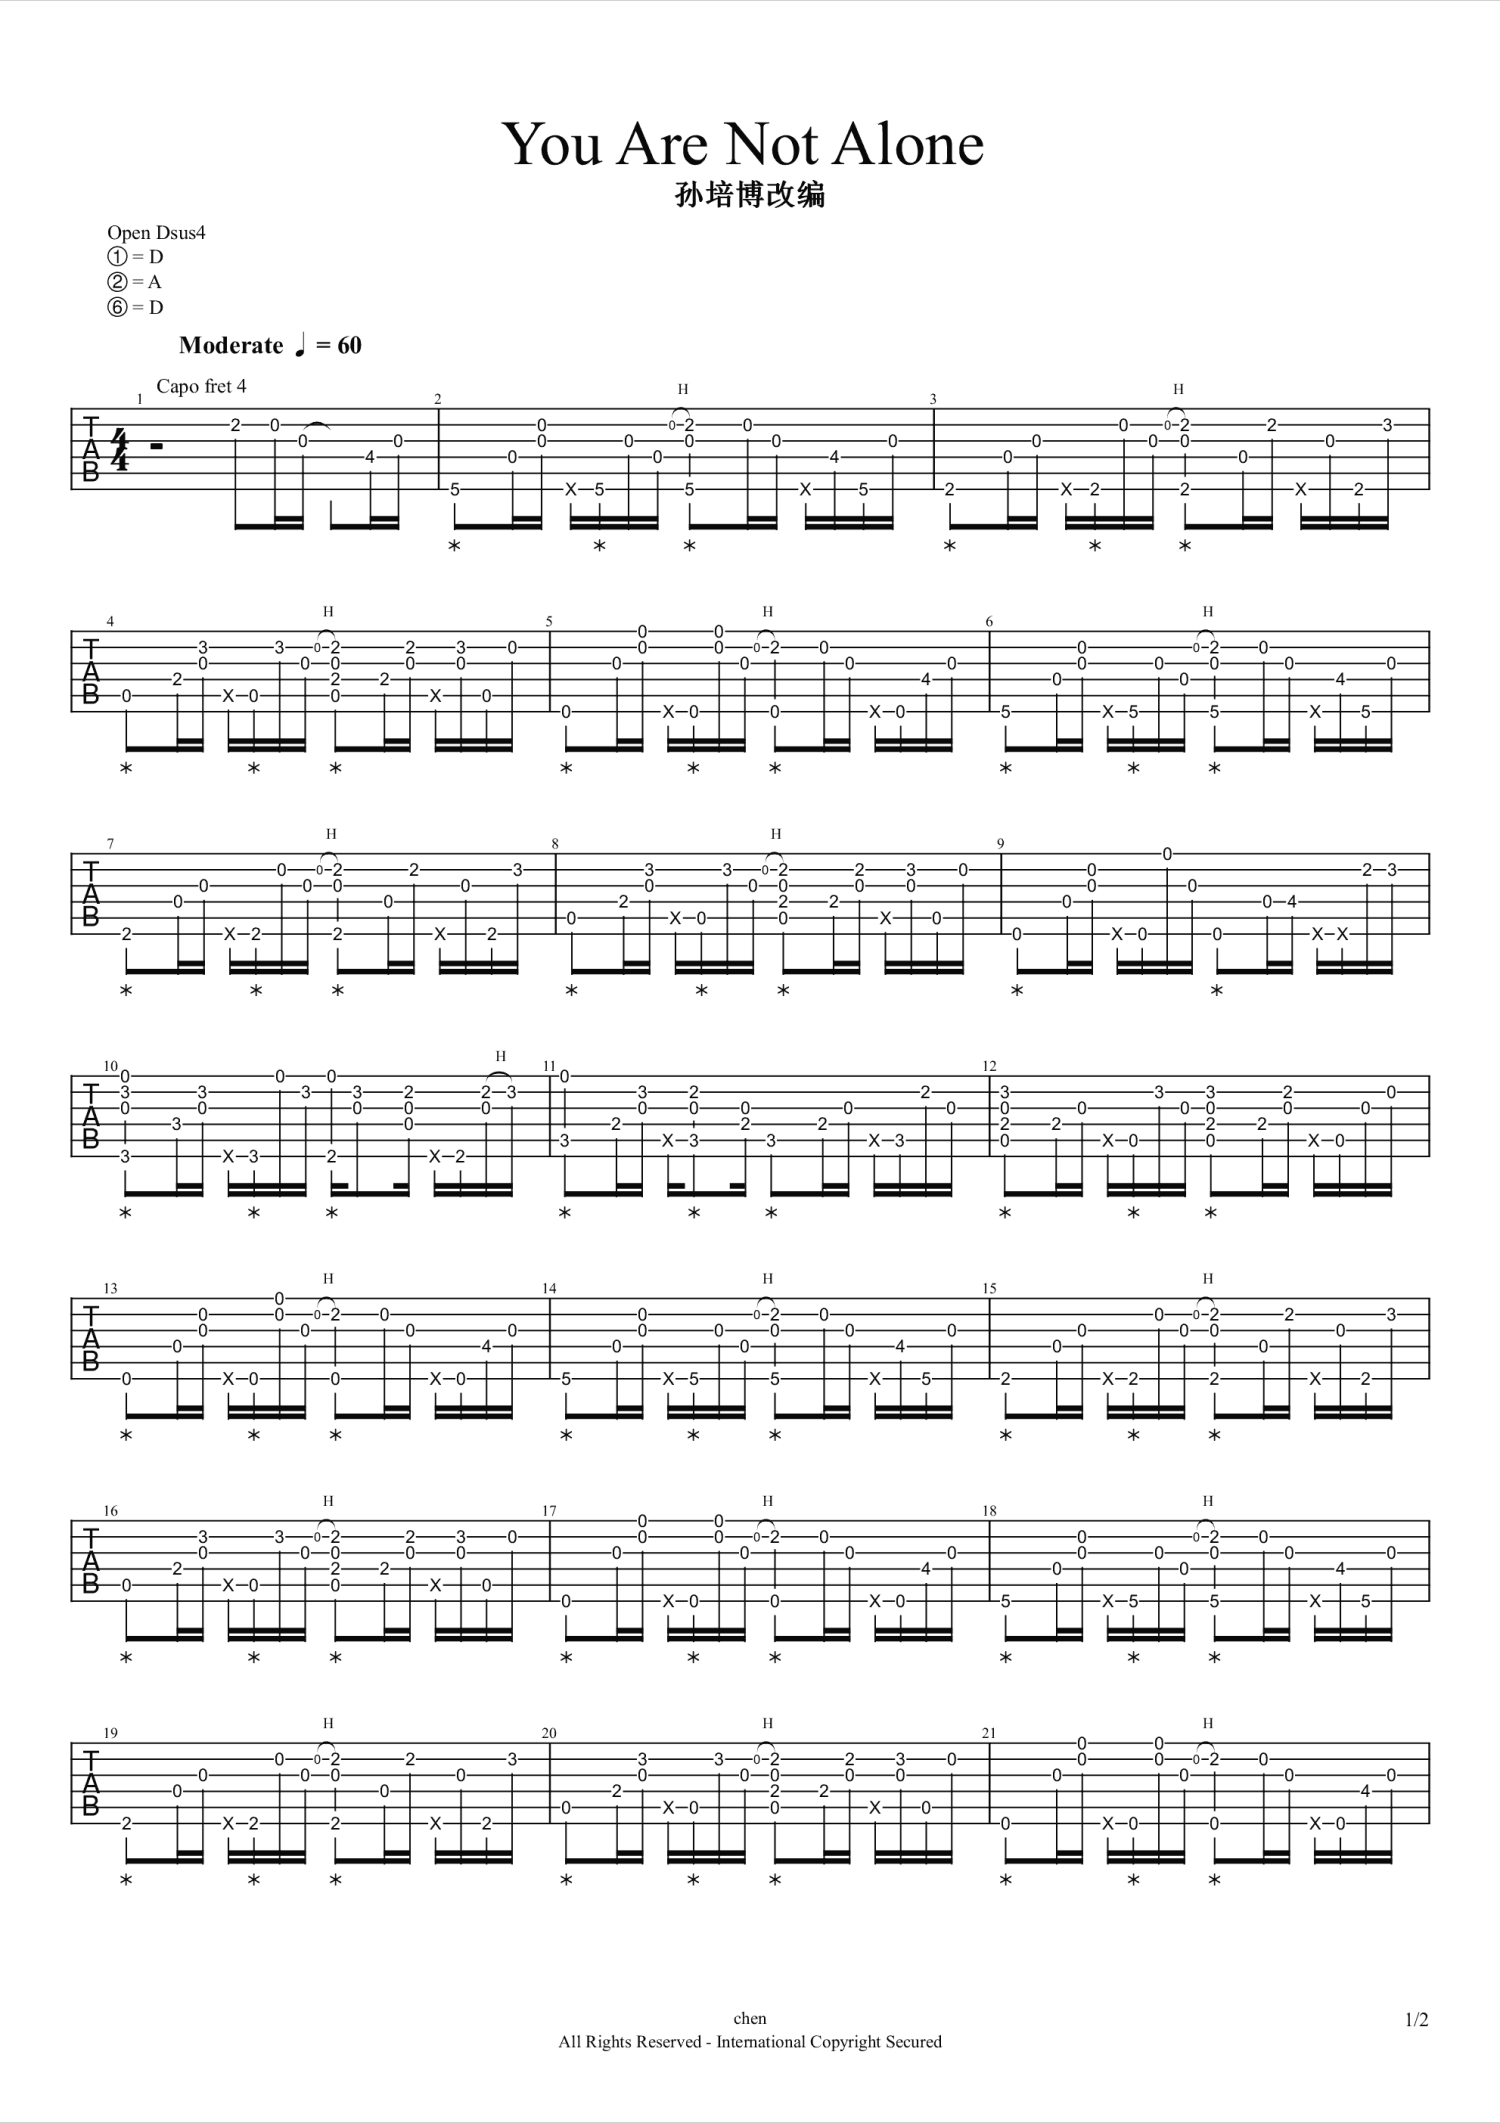 《Alone》吉他谱C调和弦简单版 - Alan Walker六线谱 - C调指法编配 - 吉他简谱